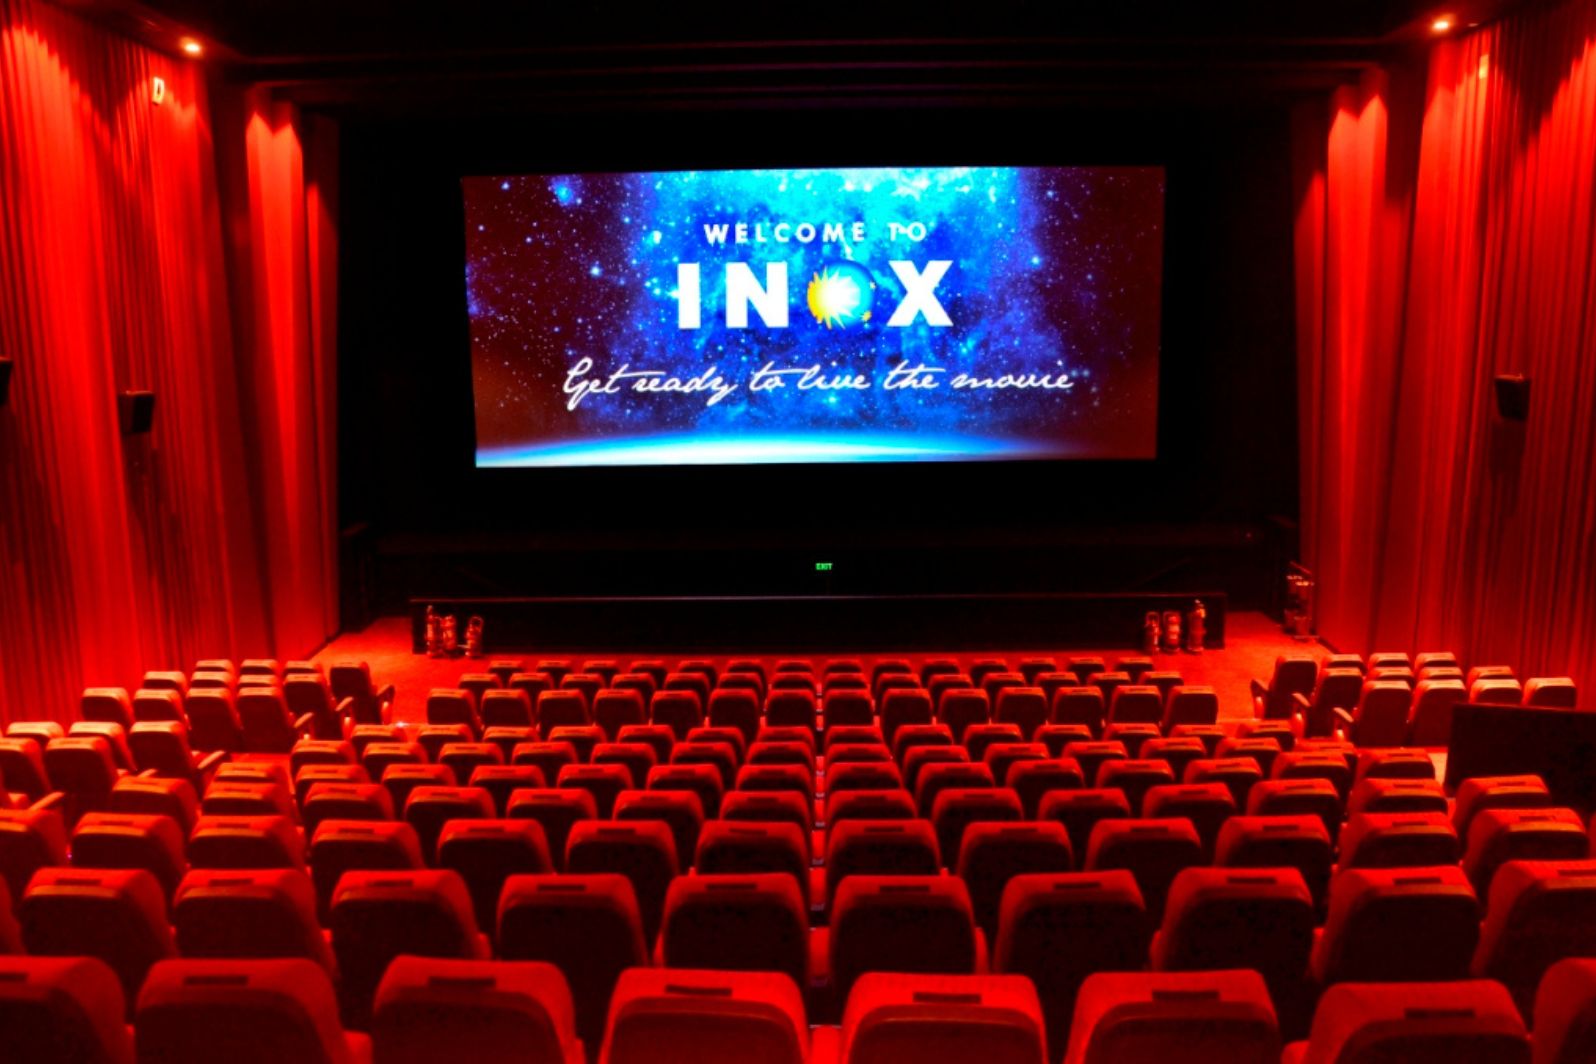 inox movie theater sector 16 gujarat